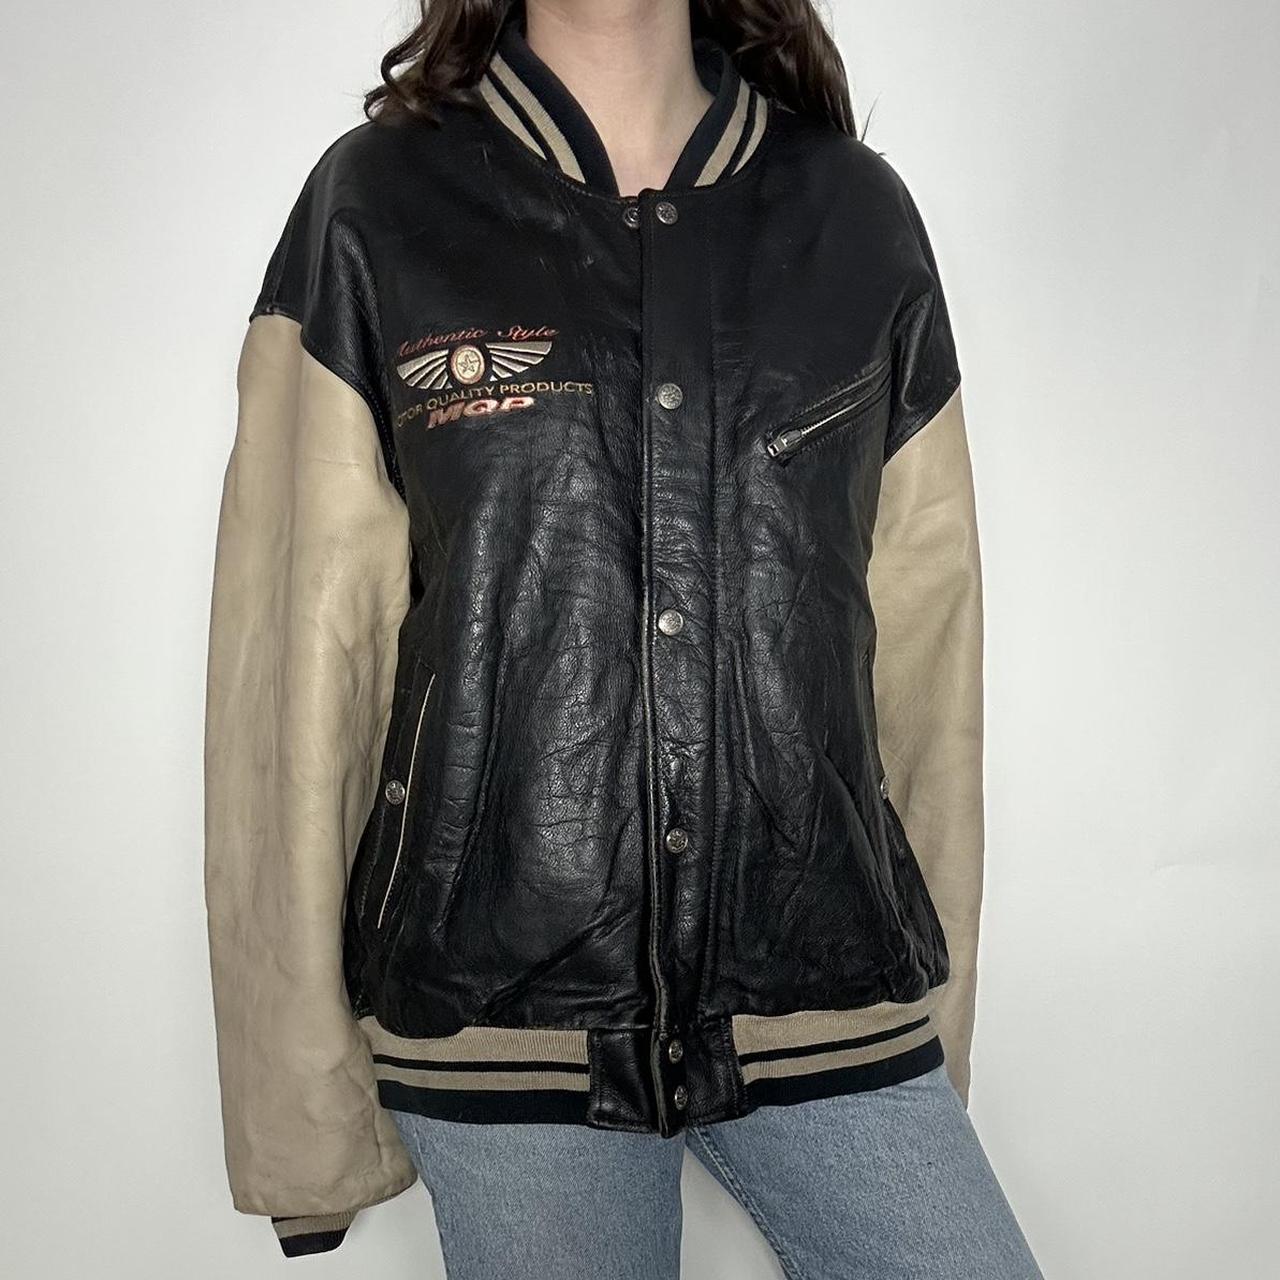 Vintage 90s MQP Nascar limited edition leather racing jacket